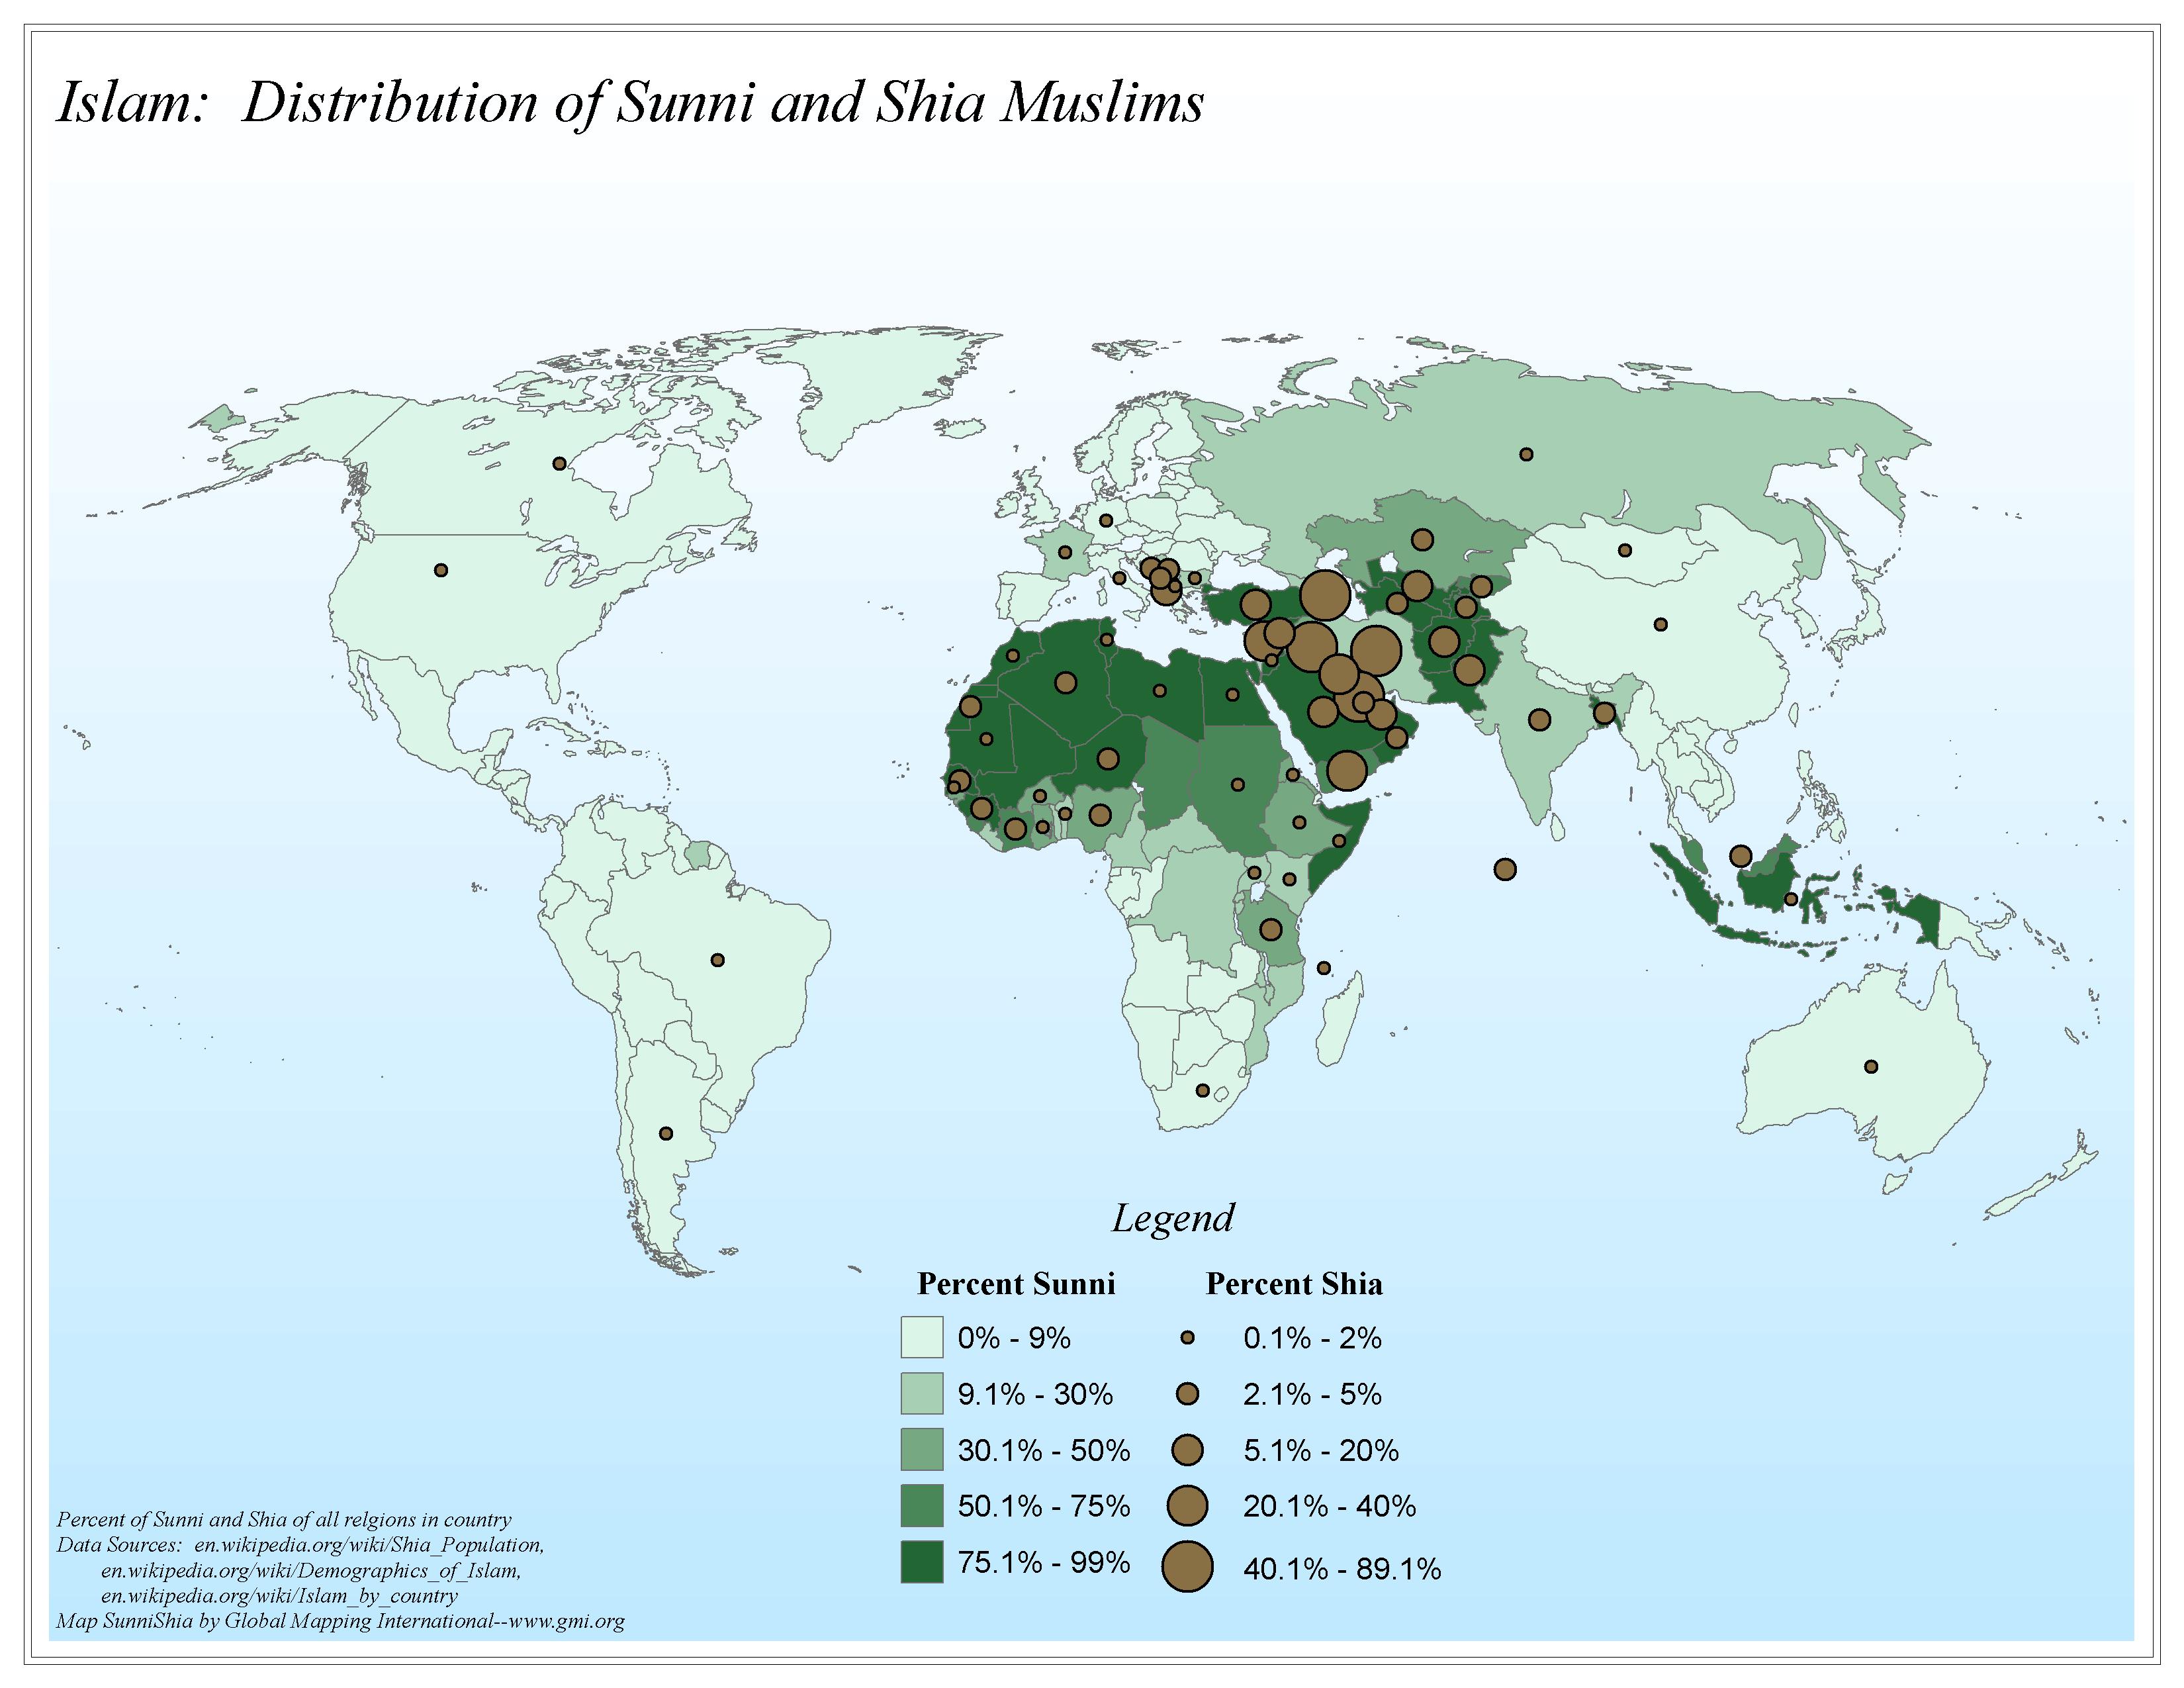 Islam: Distribution of Sunni and Shia Muslims